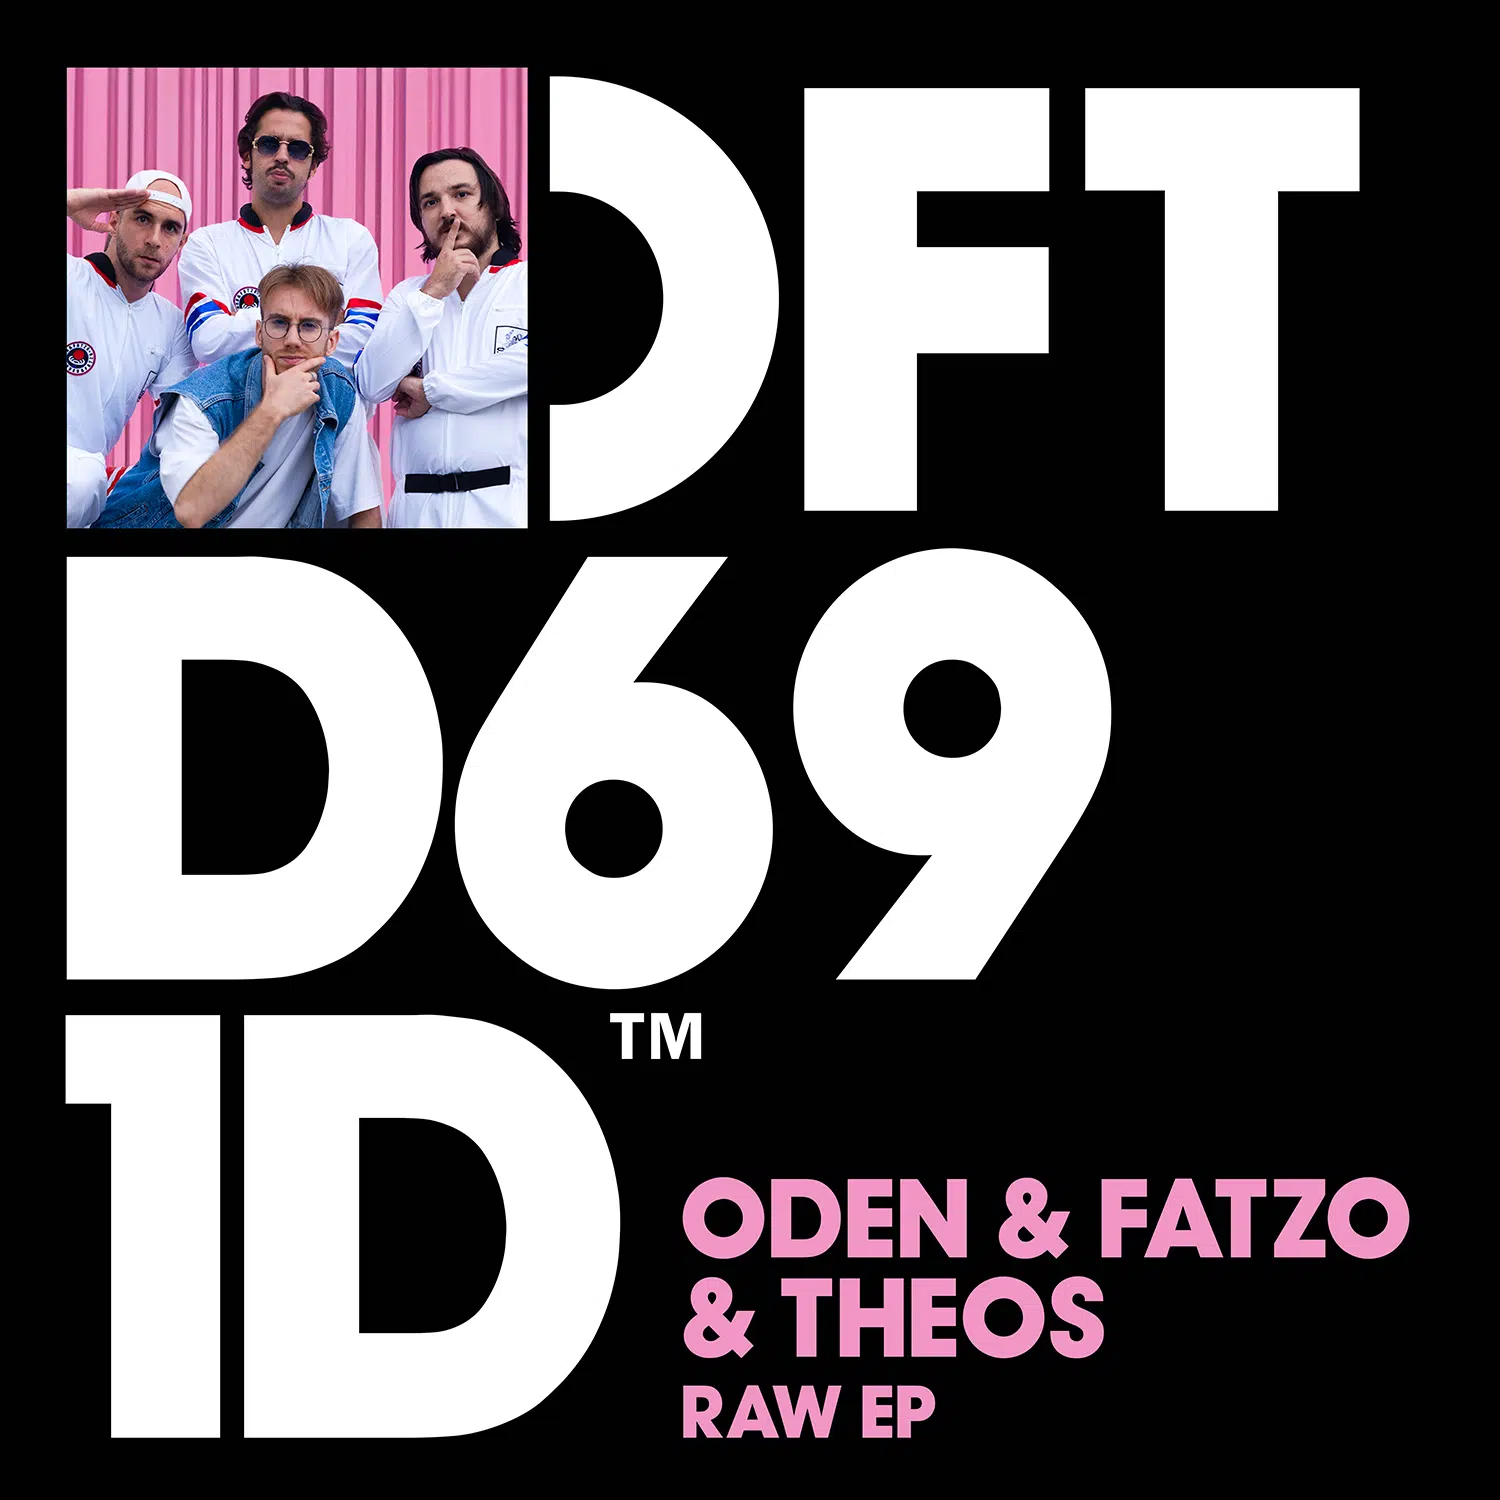 Oden & Fatzo & Theos “Raw EP”